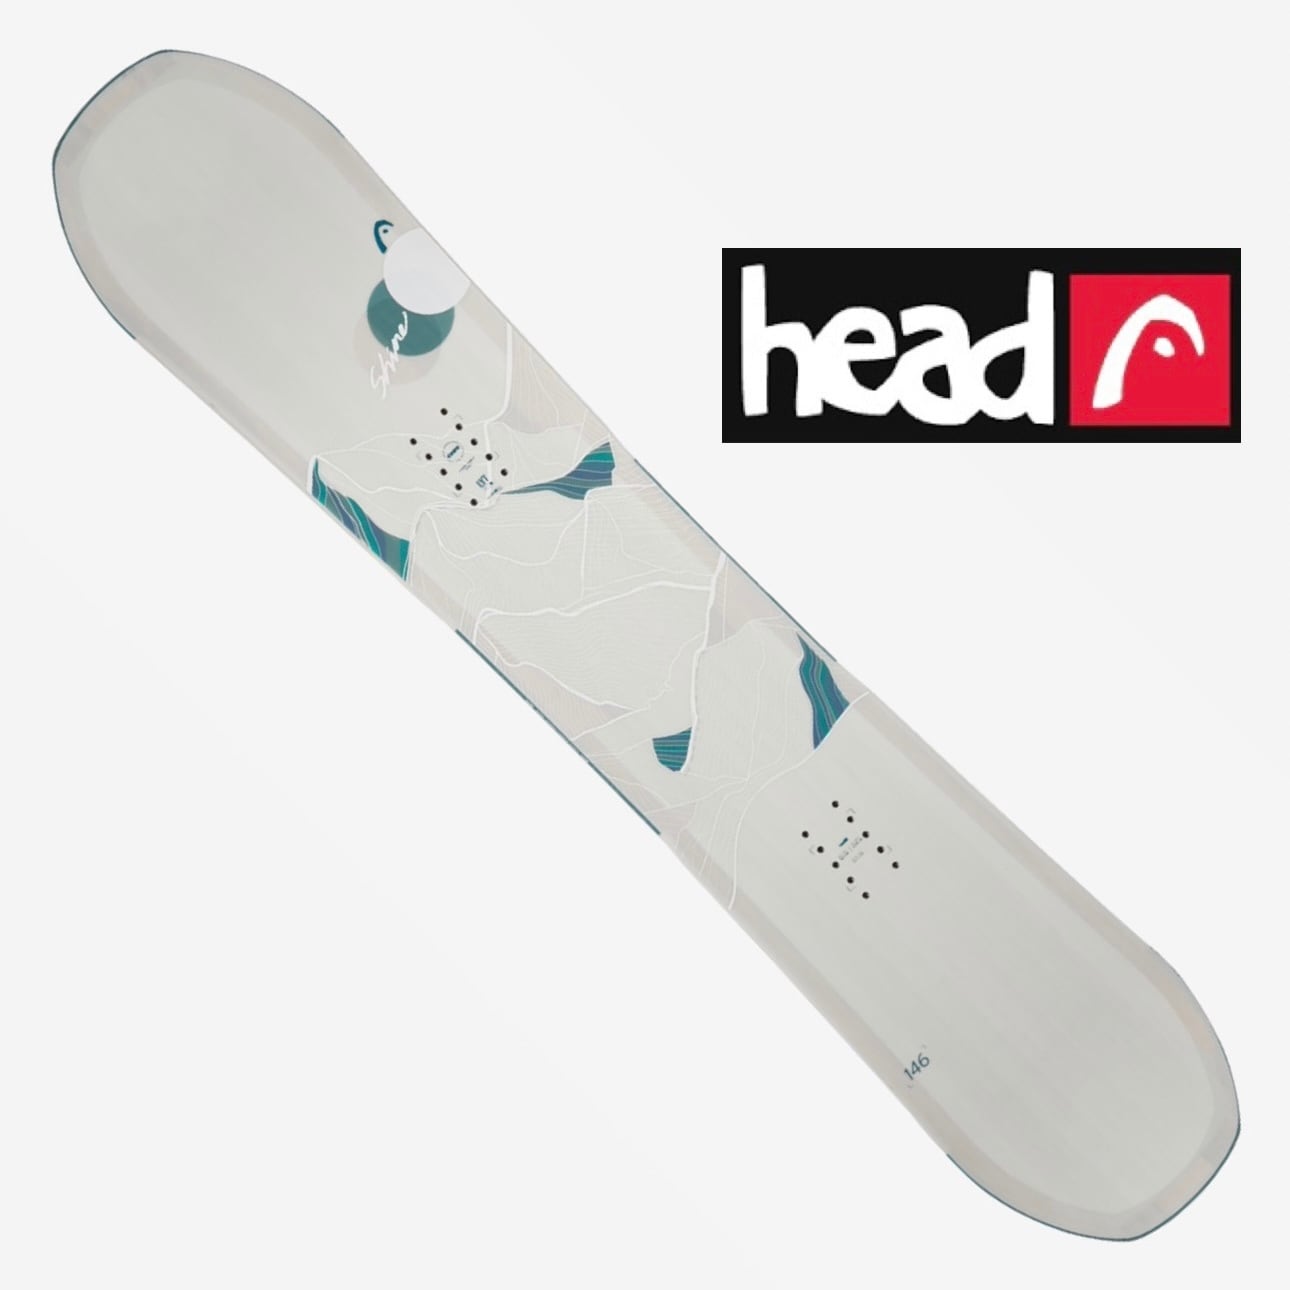 23-24 head SHINE LYT SOWBOARD スノーボード ヘッド 板 シーンライト